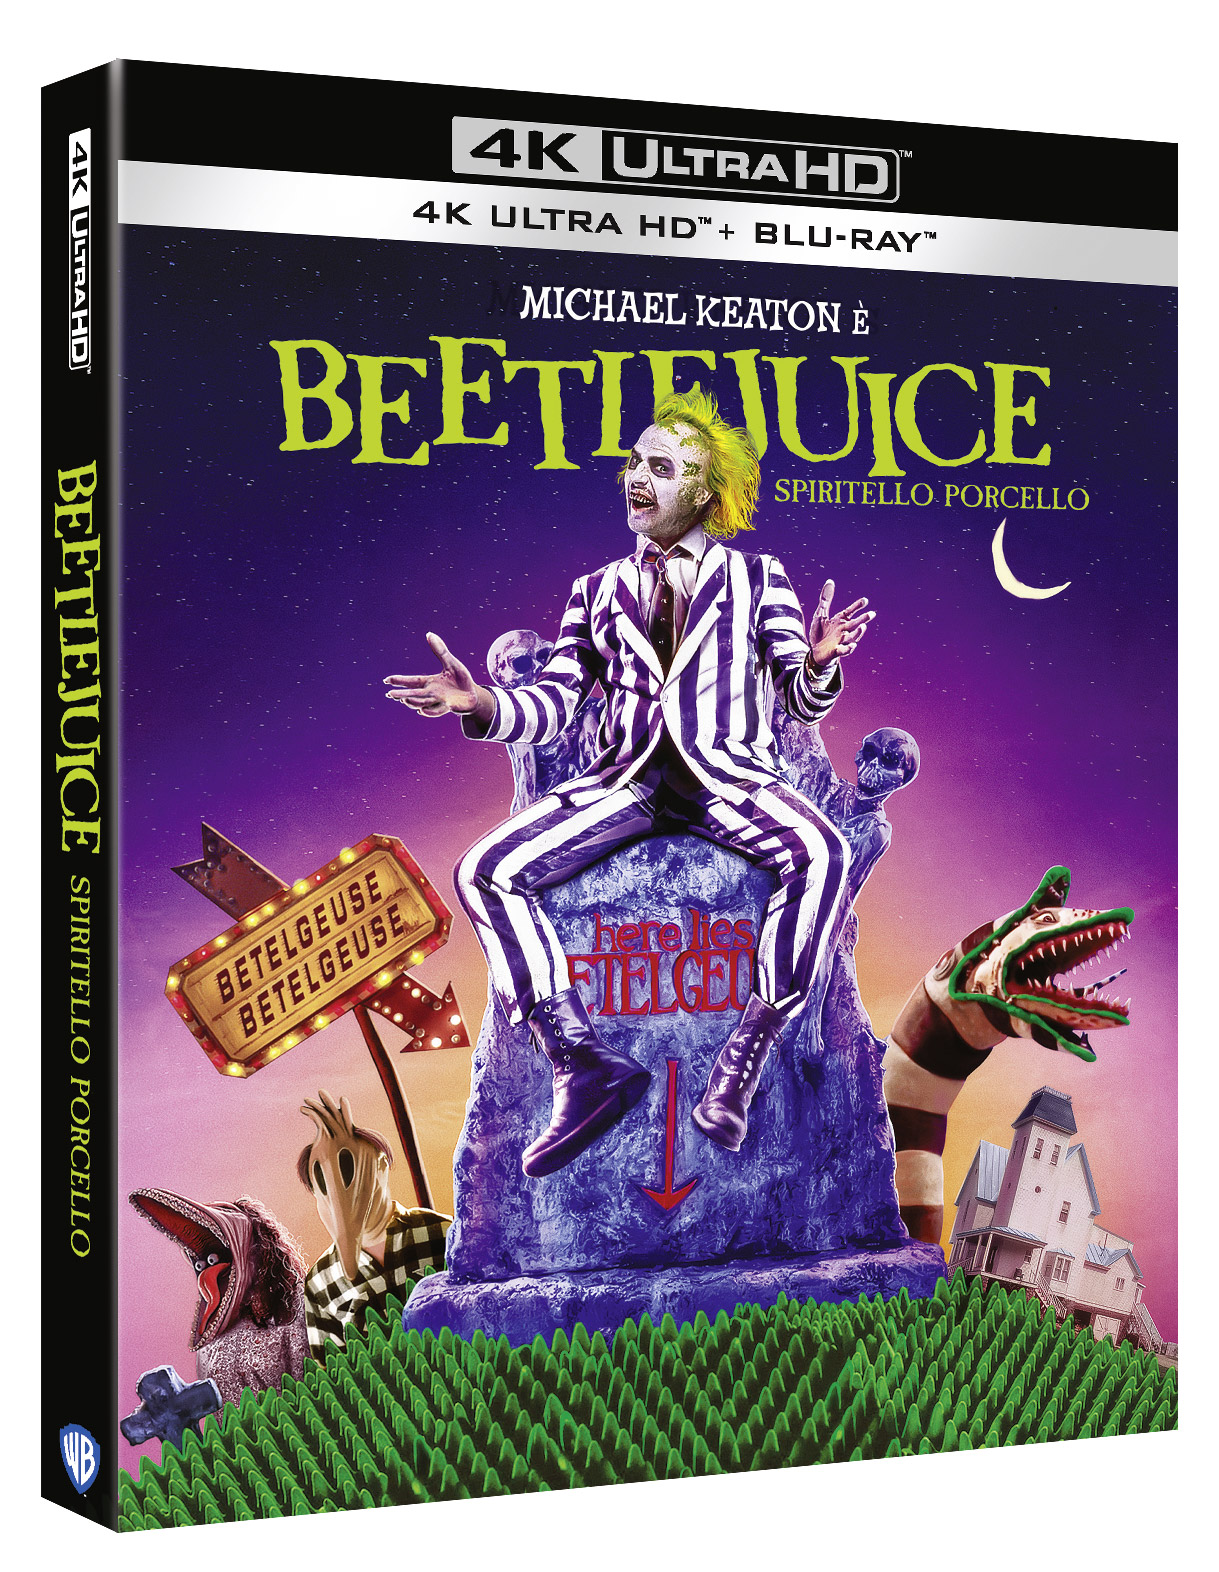 Beetlejuice - Spiritello Porcello nell'inedita versione 4K Ultra HD + Blu-ray